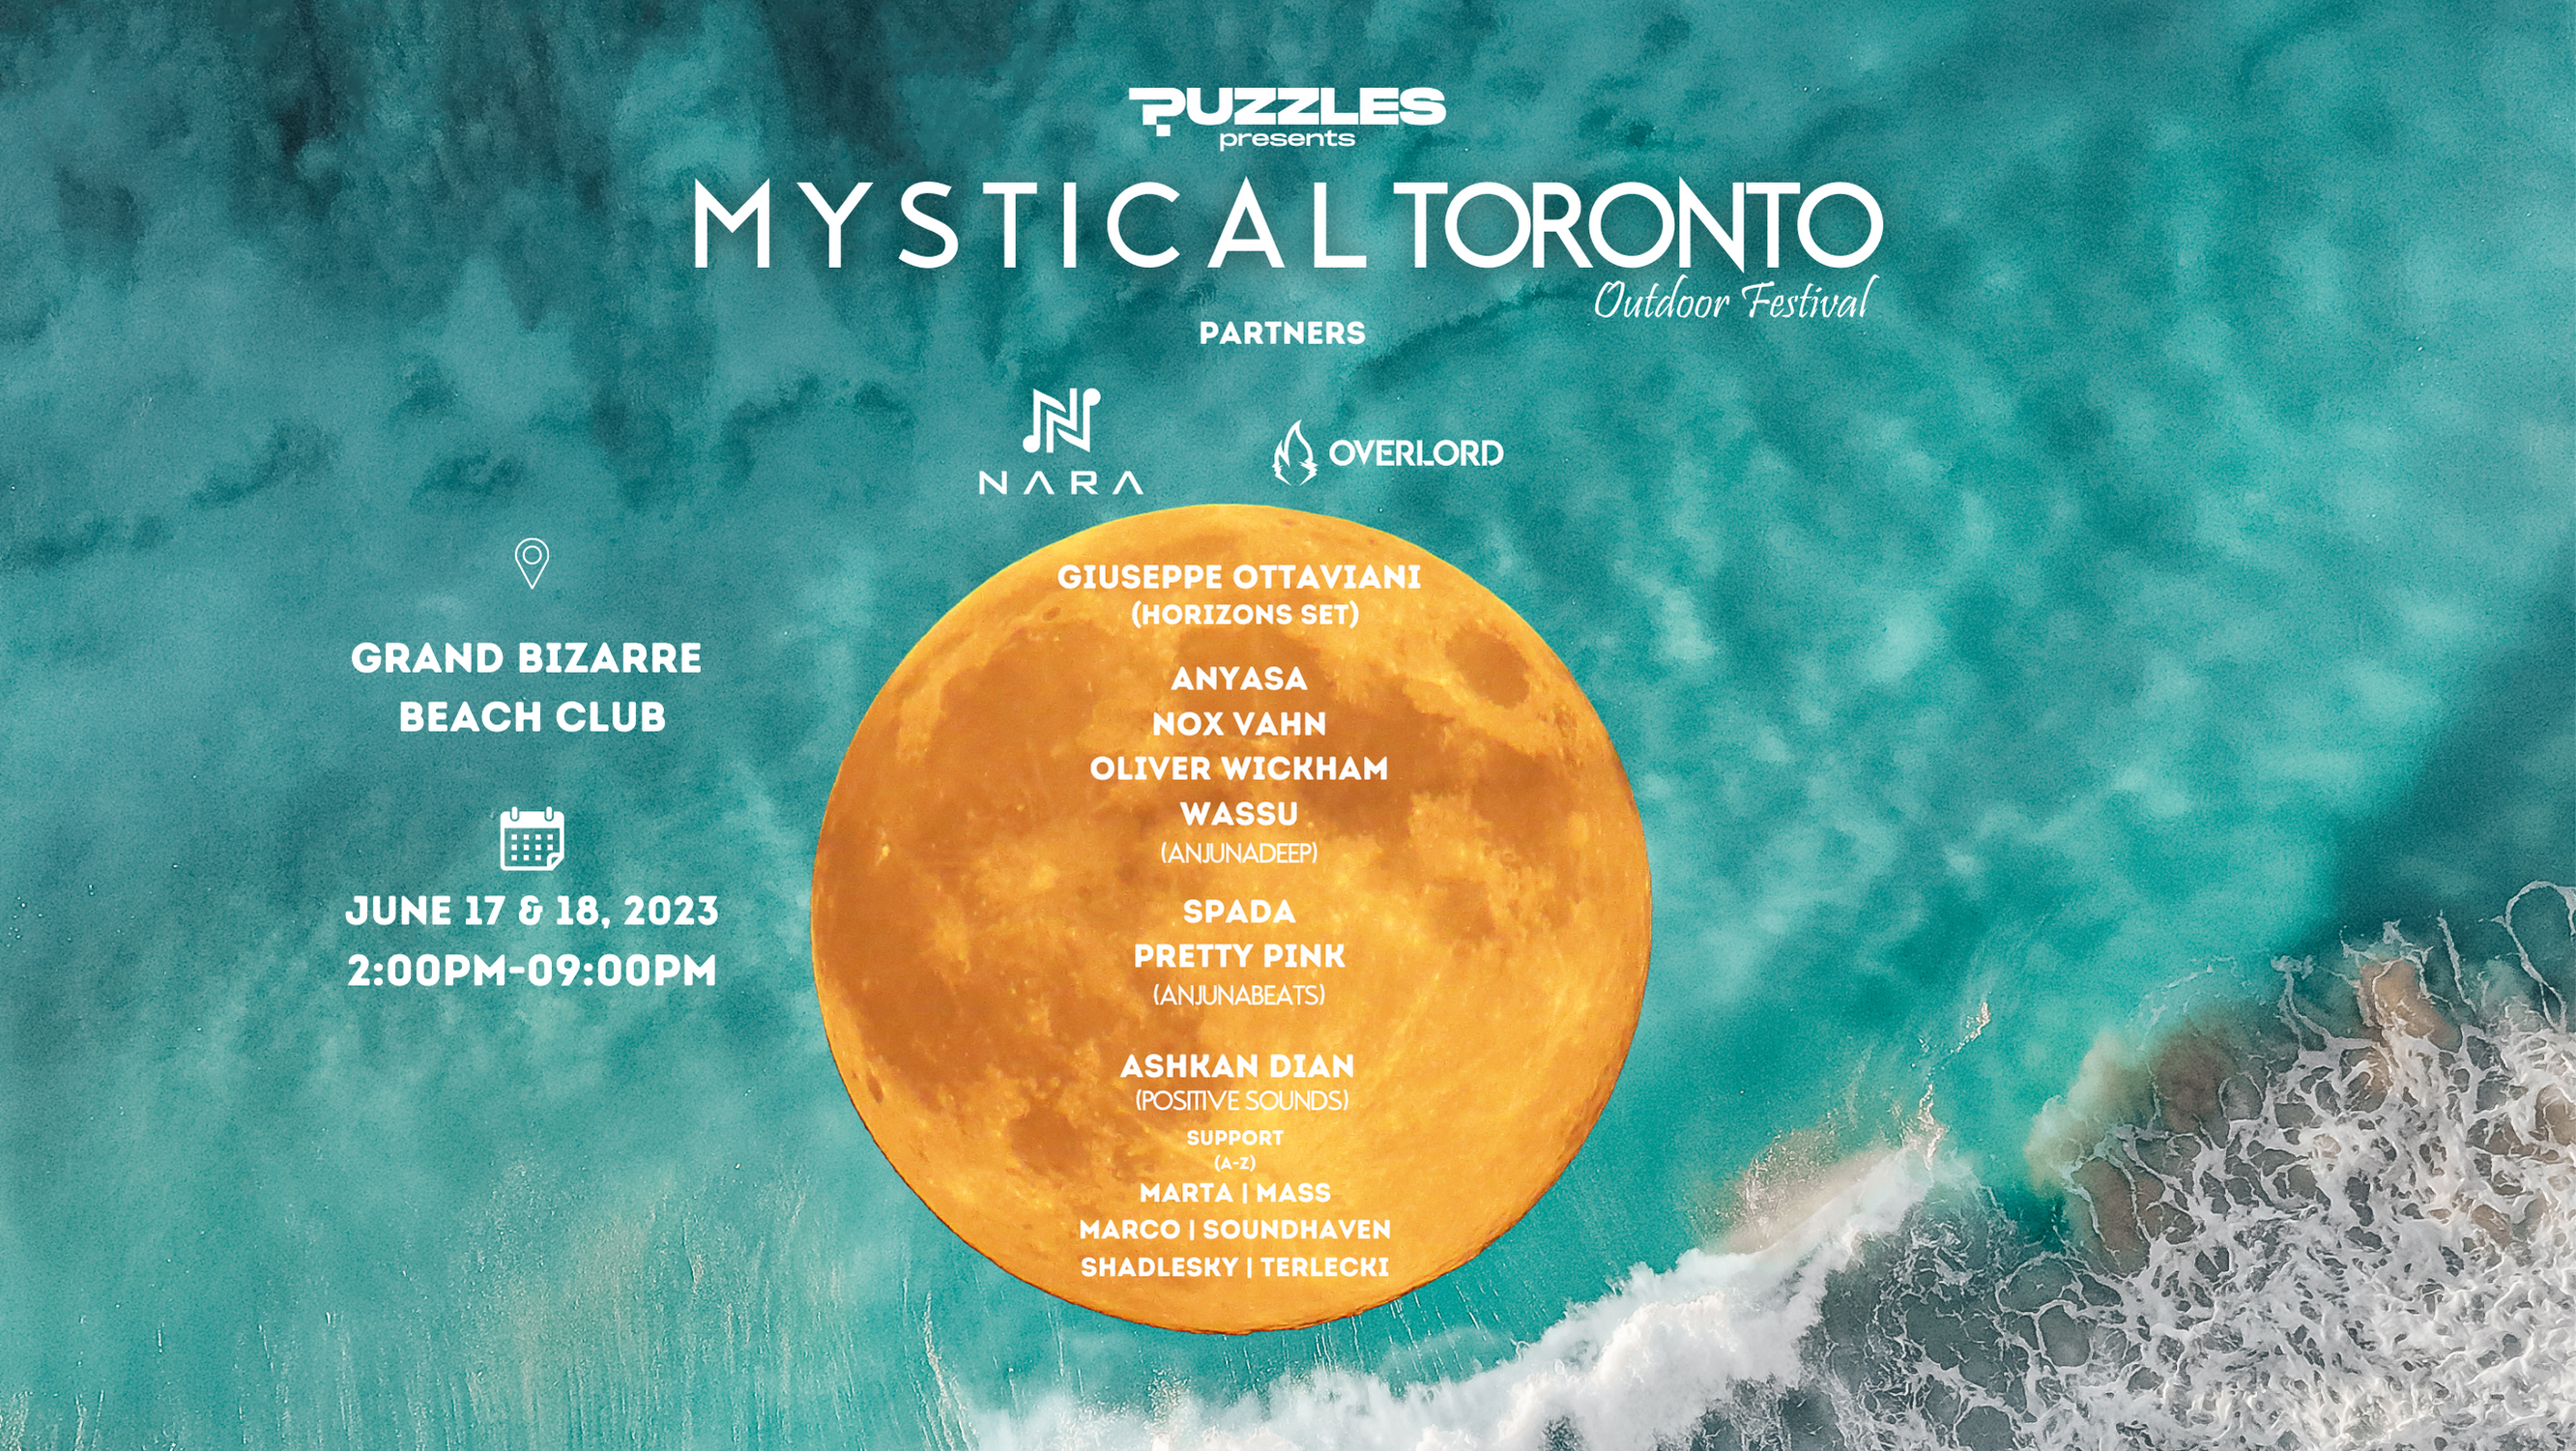 Mystical Toronto: Giuseppe Ottaviani/ Pretty Pink/ Spada/ Nox Vahn/ Wassu/ Anyasa/ Oliver/ - フライヤー表